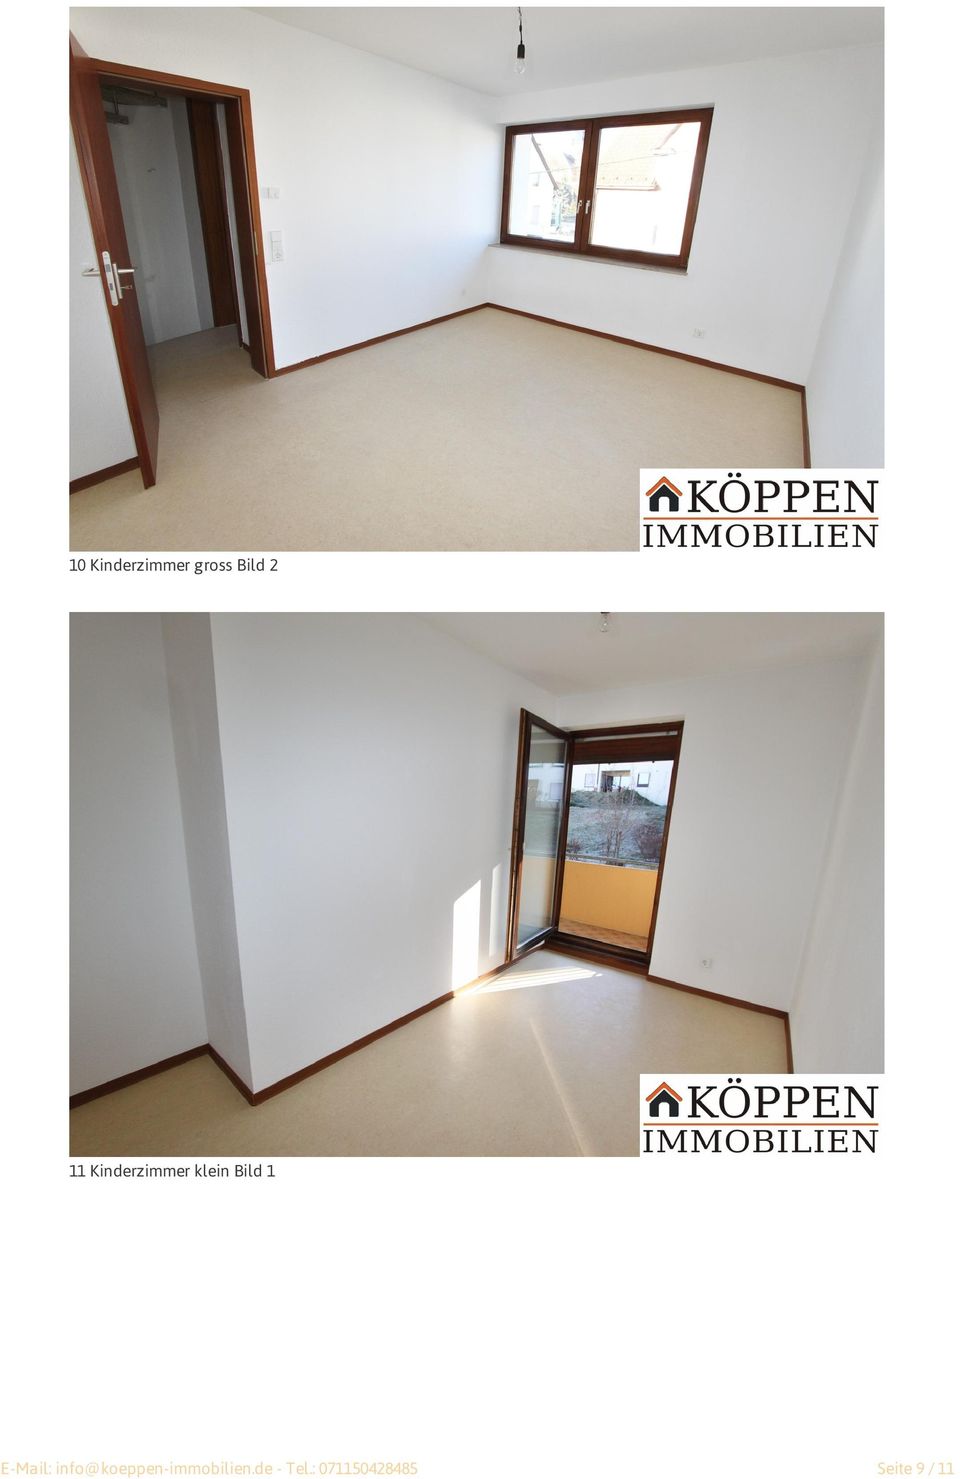 E-Mail: info@koeppen-immobilien.